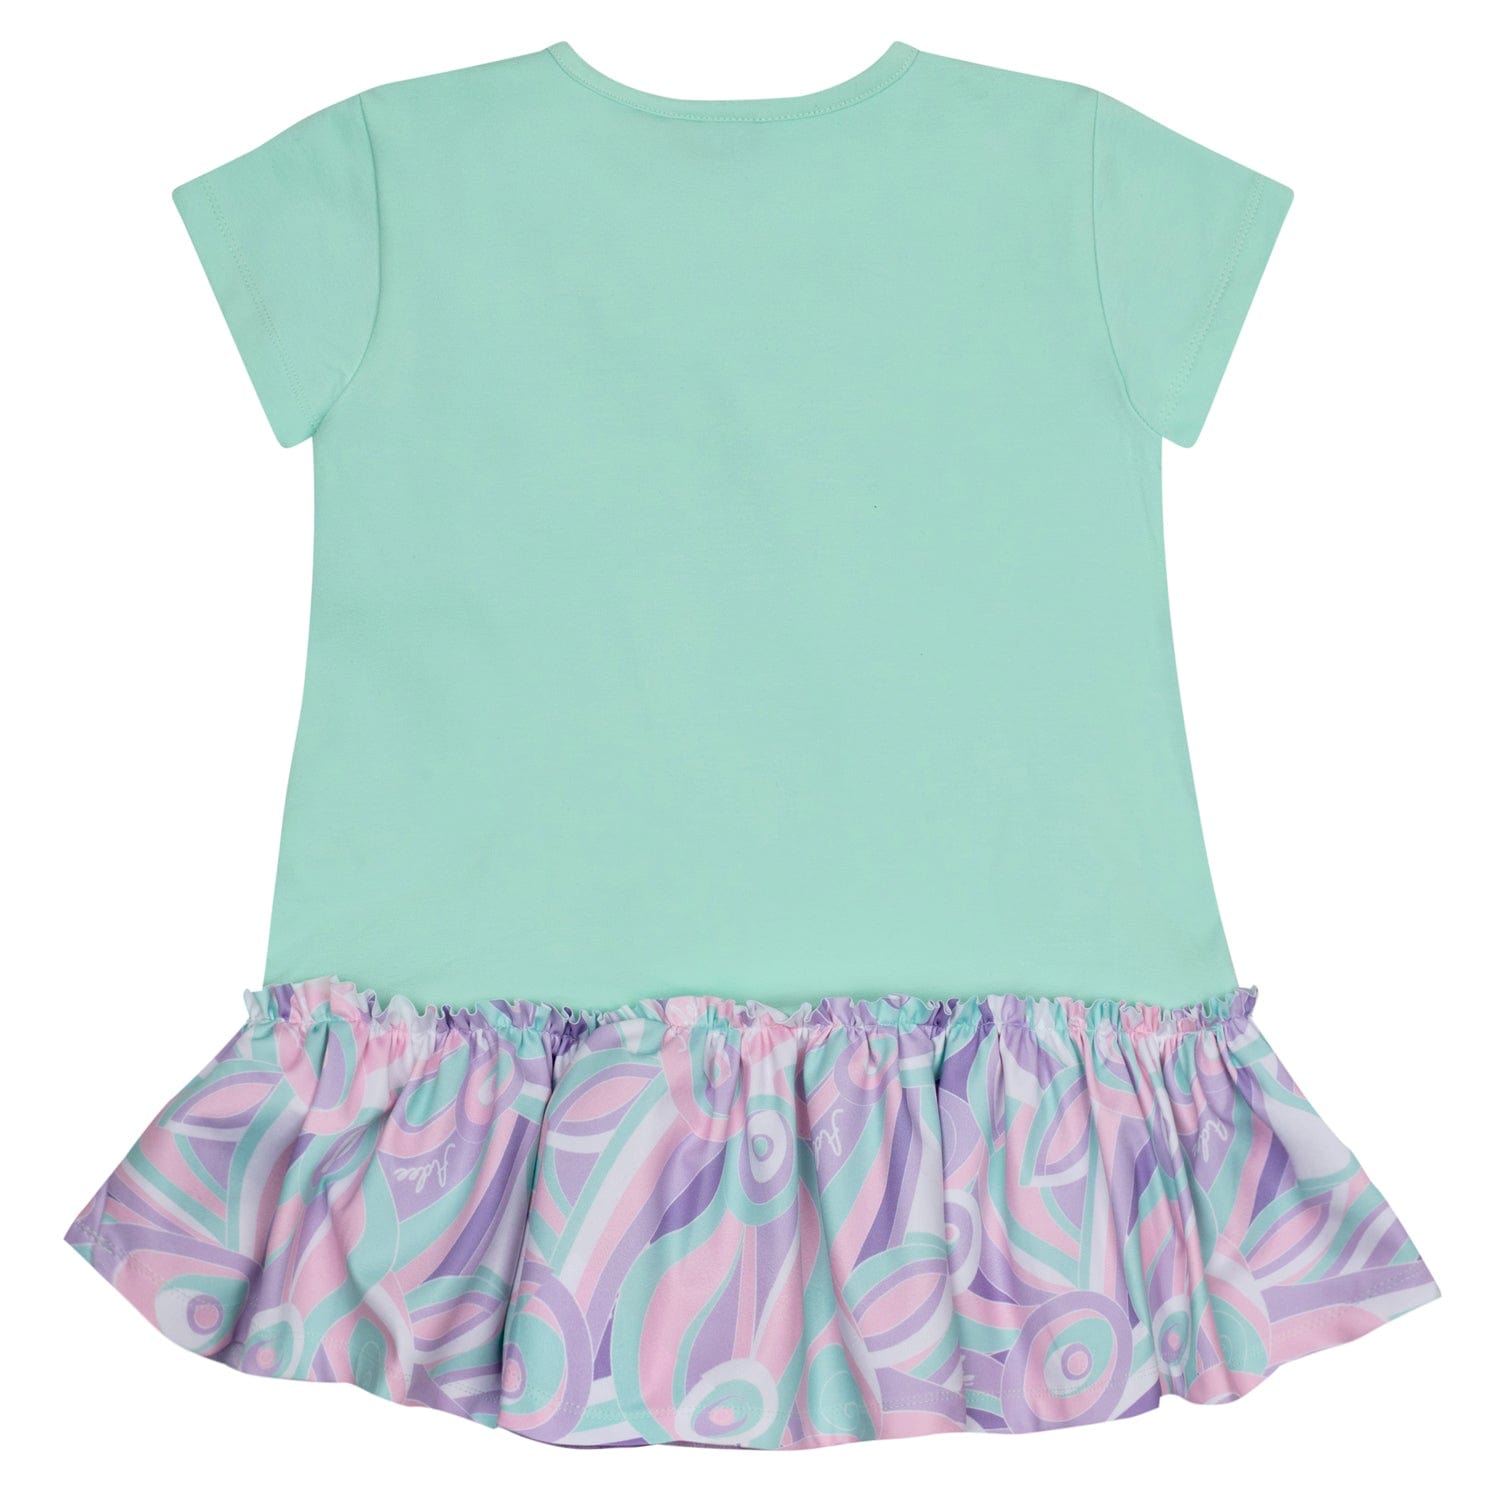 A DEE - Norah Popping Pastels Bow Sweat Dress - Mint